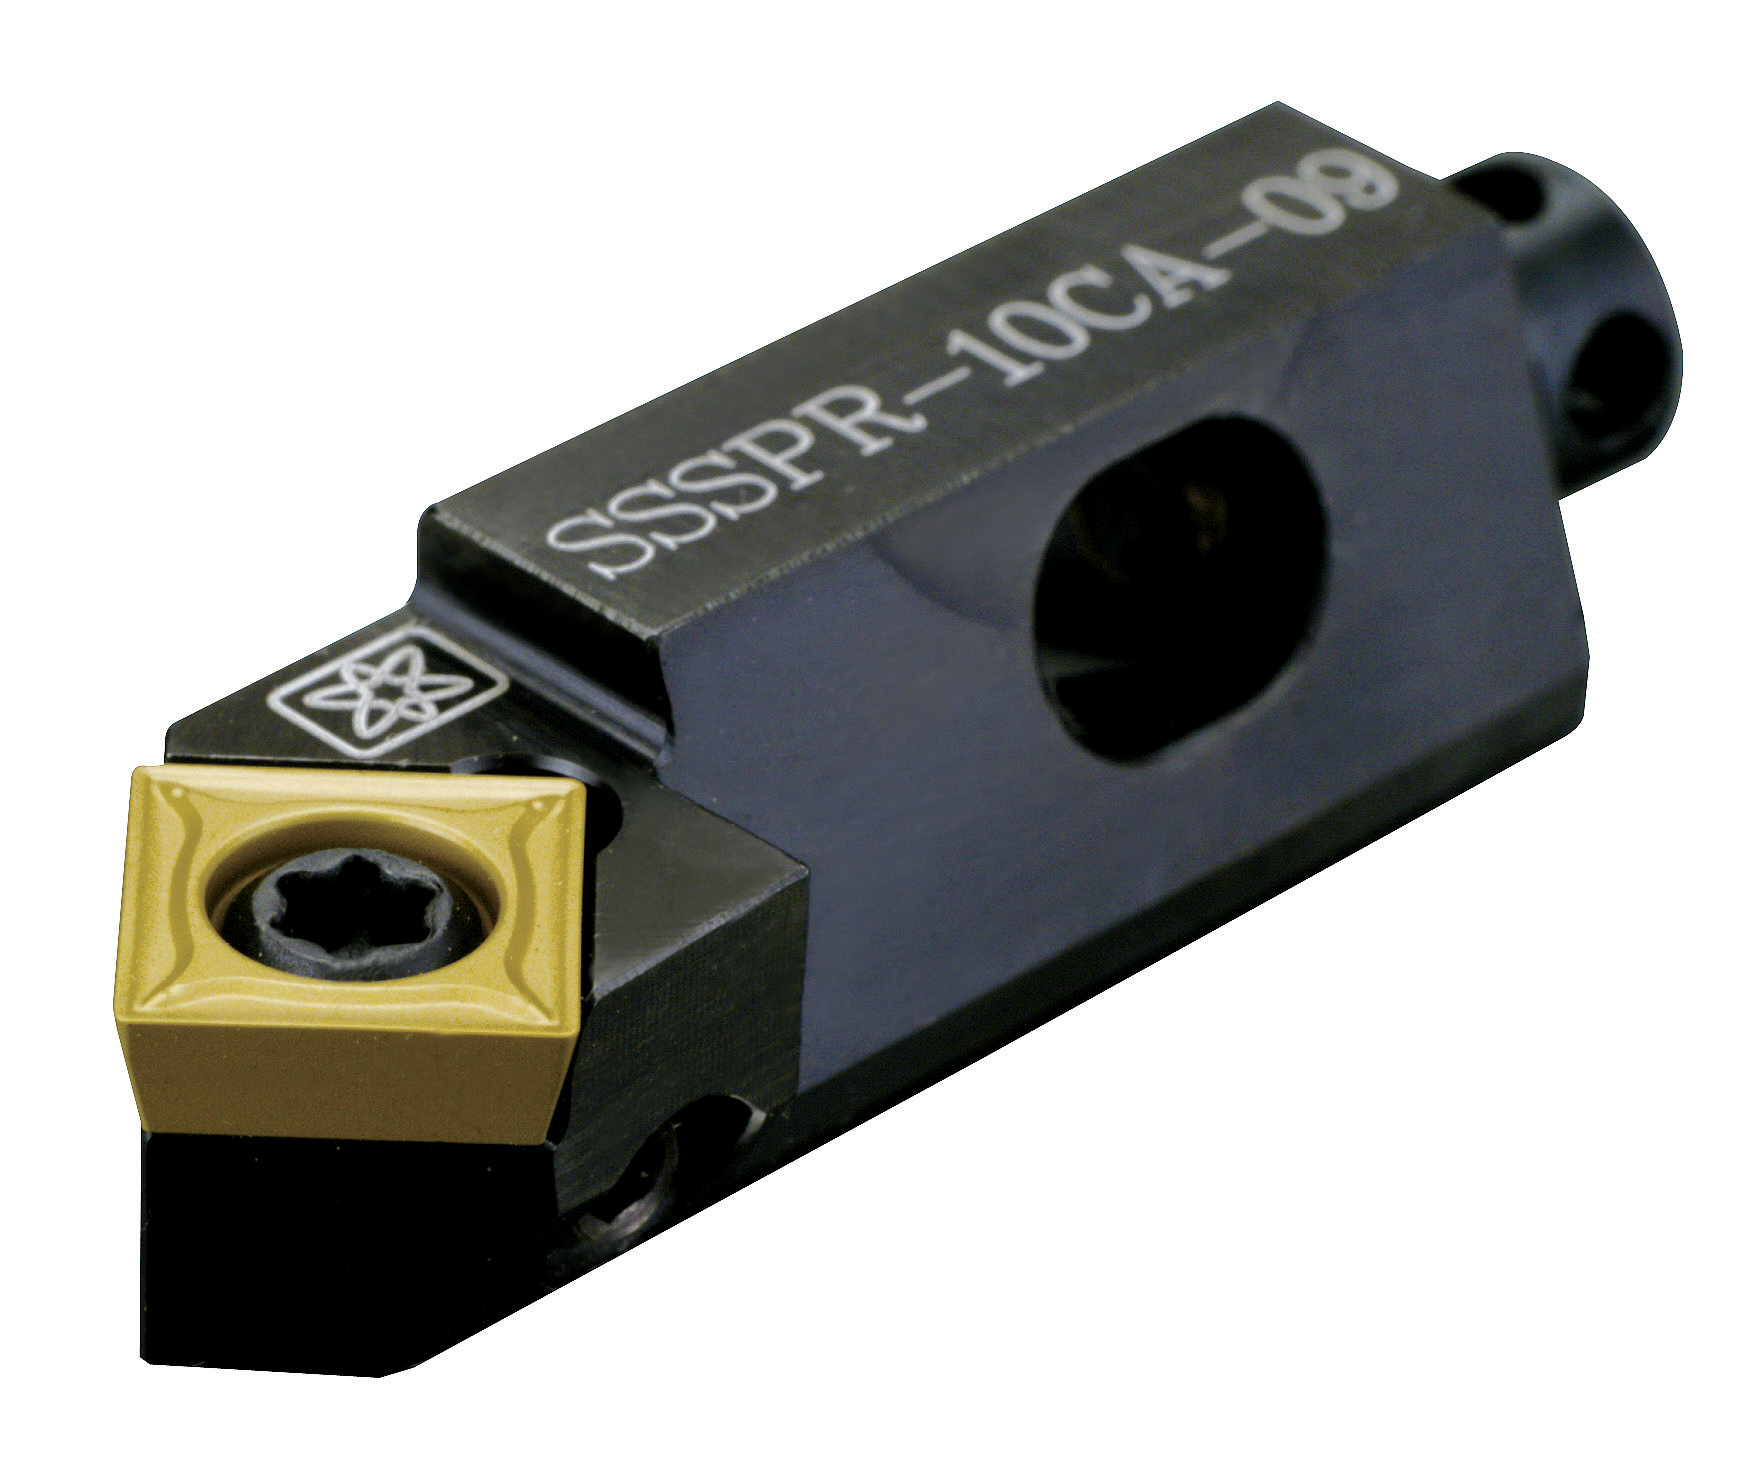 Catalog|SSSPR-10CA-09 （SP...0903）Cartridges